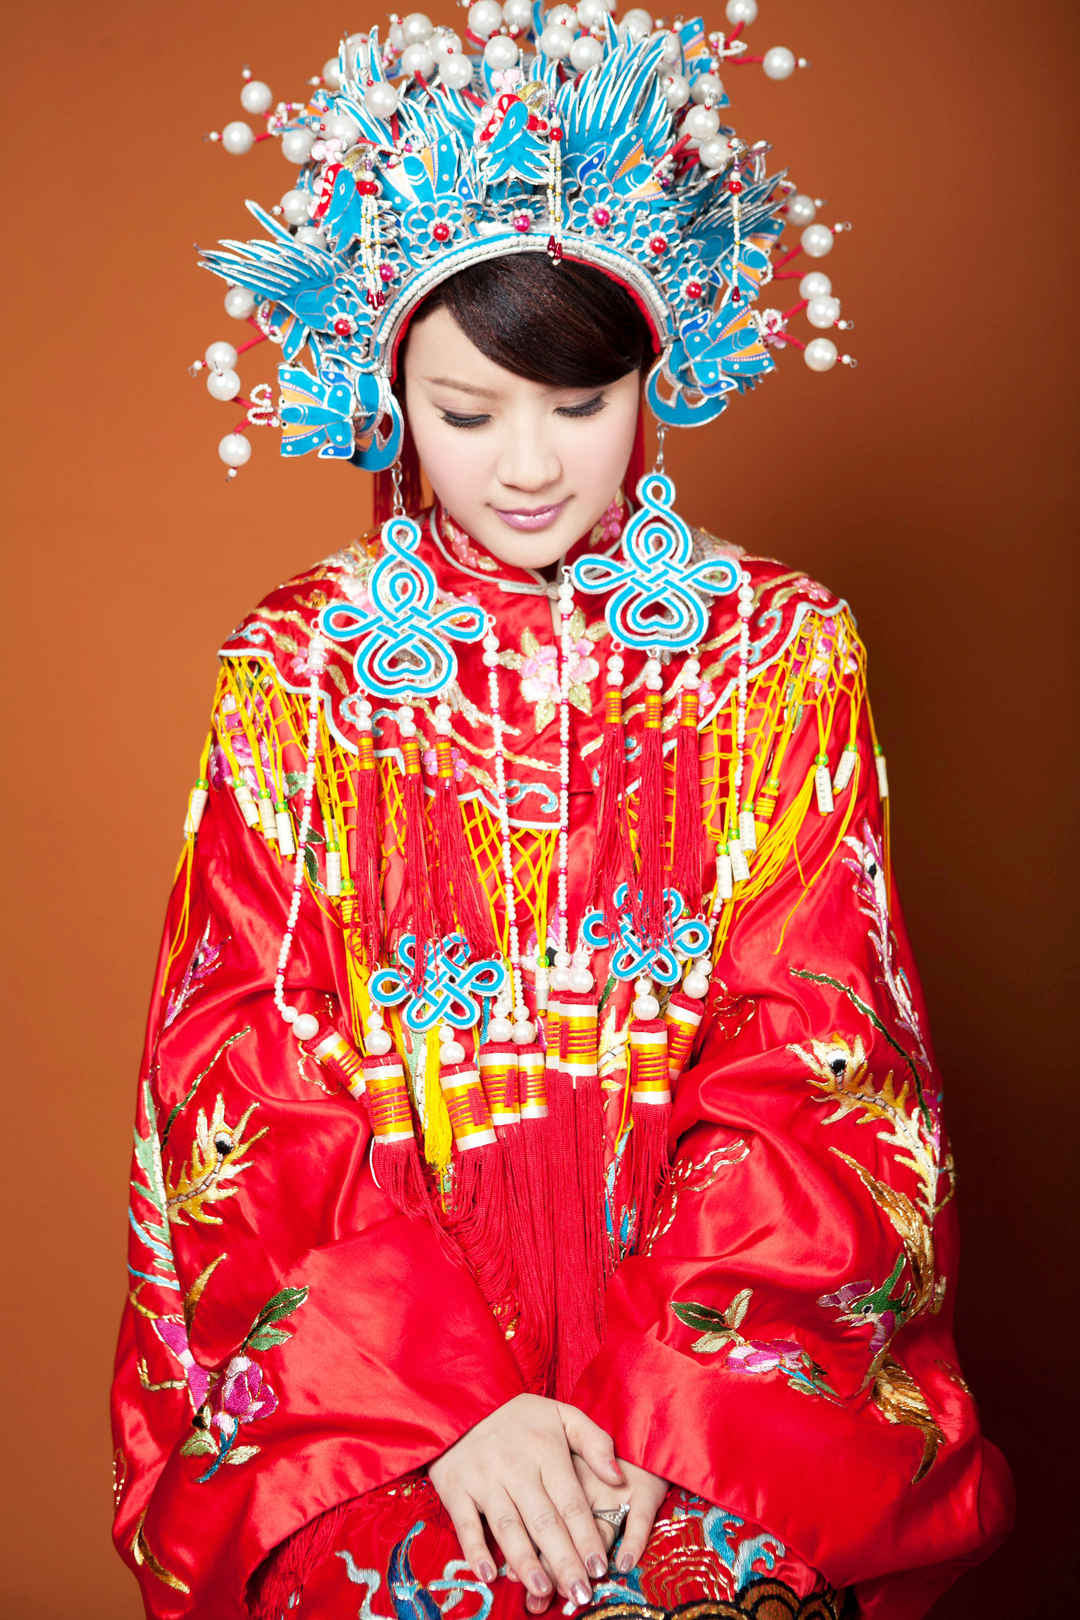 beautiful traditional dresses